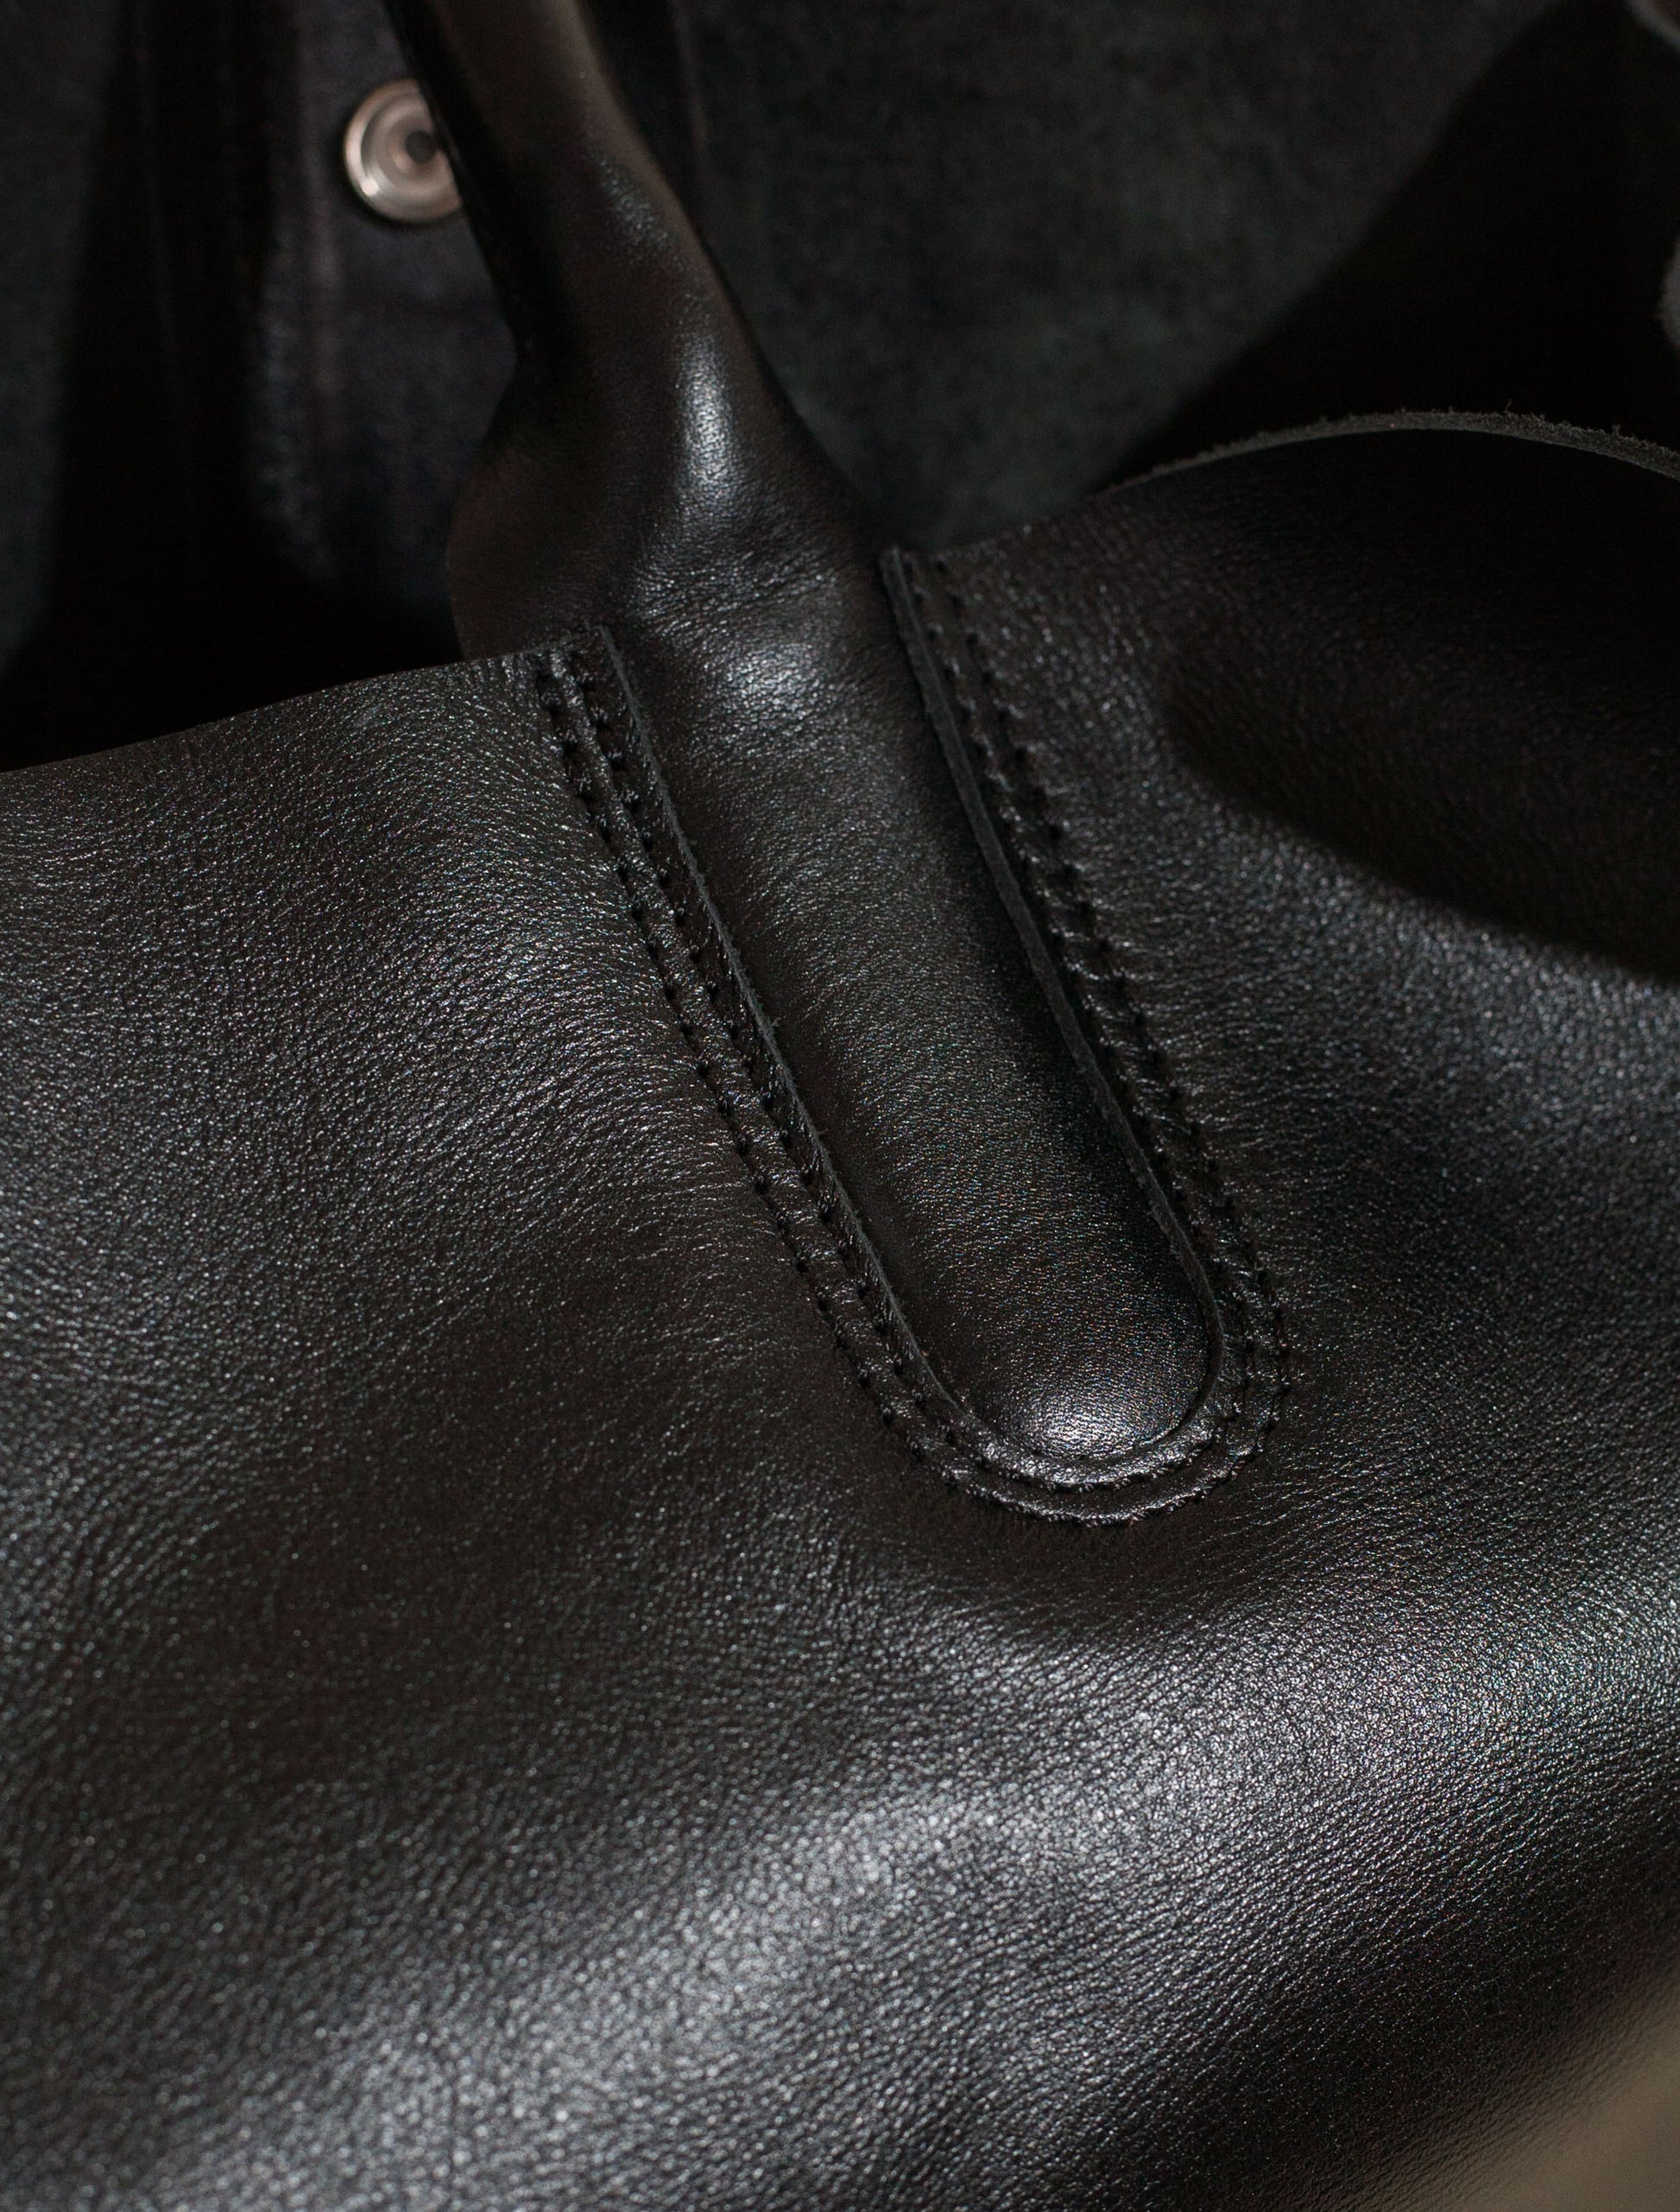 Leather Utility Bag (Black)